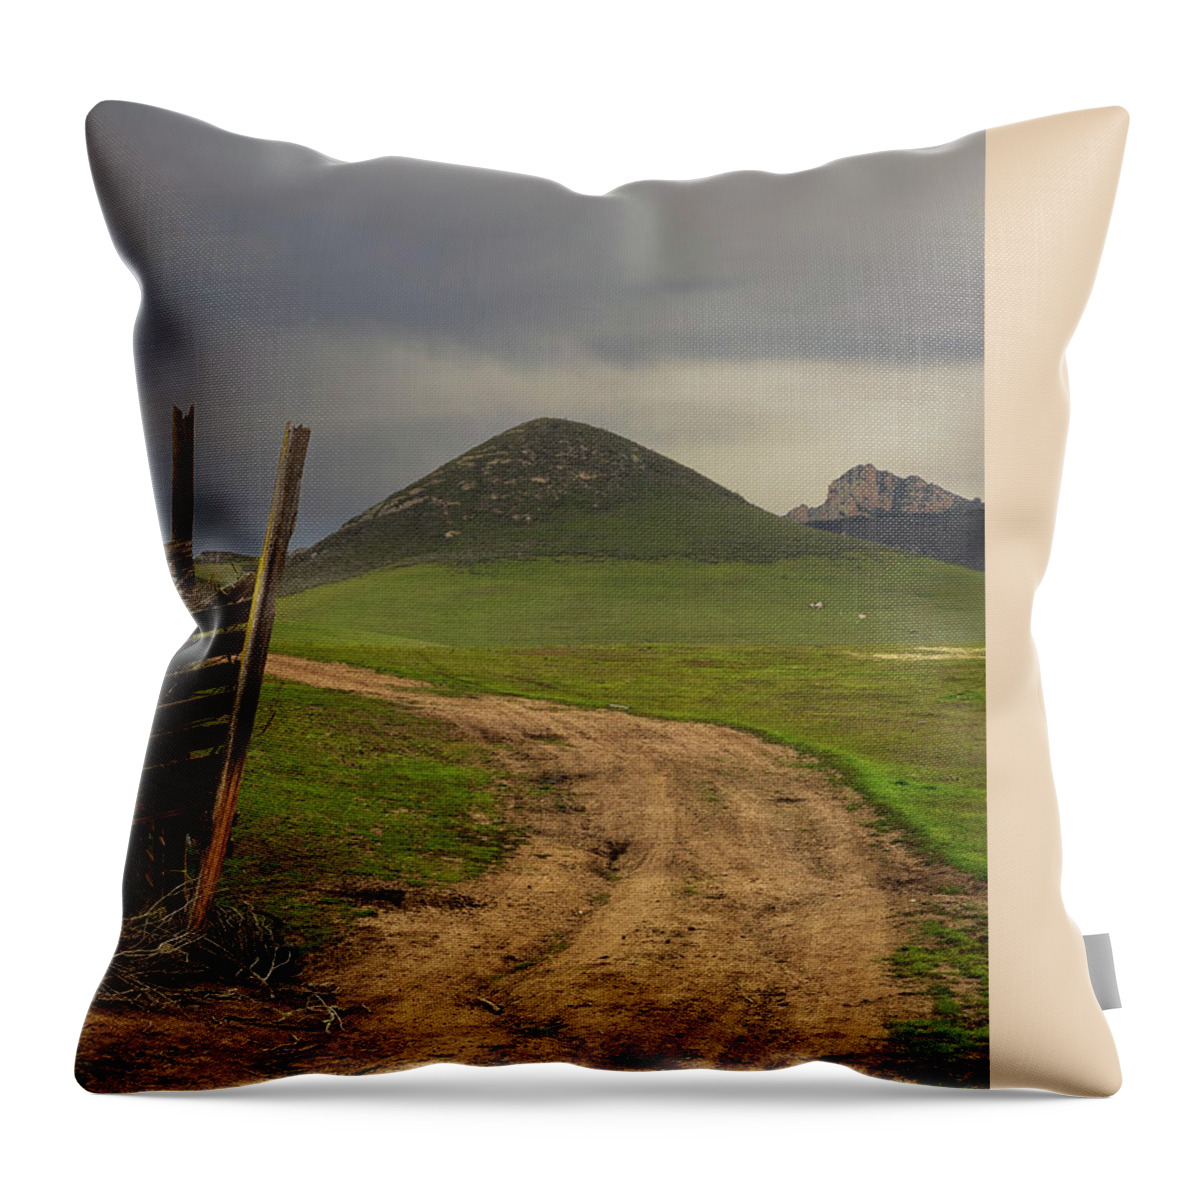  Throw Pillow featuring the photograph San Luis Obispo #2 by Lars Mikkelsen